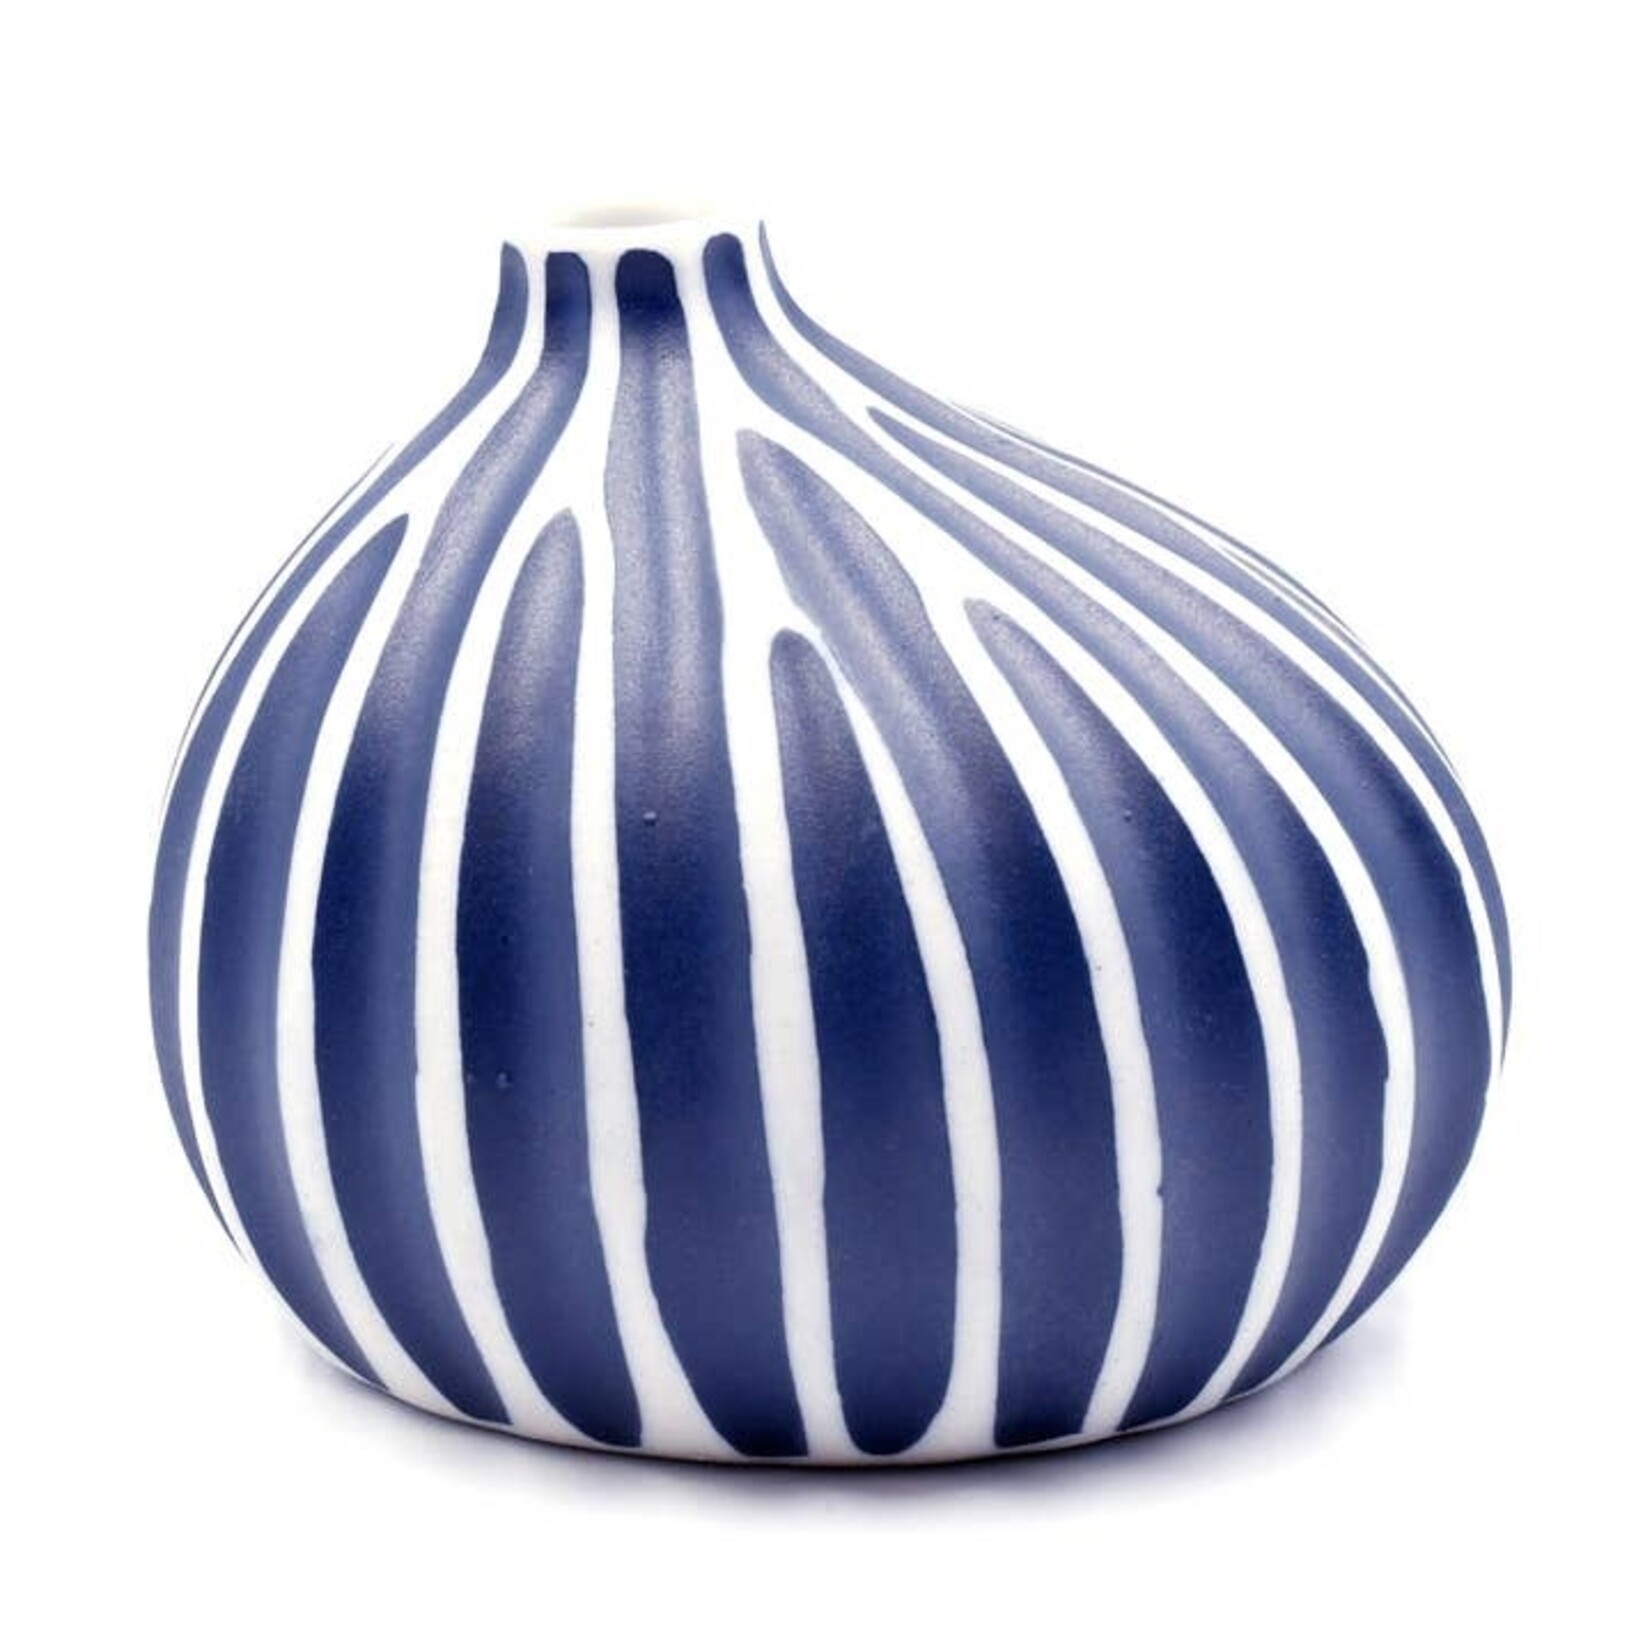 Gugu Pim Porcelain Bud Vase in BL6 Blue/White